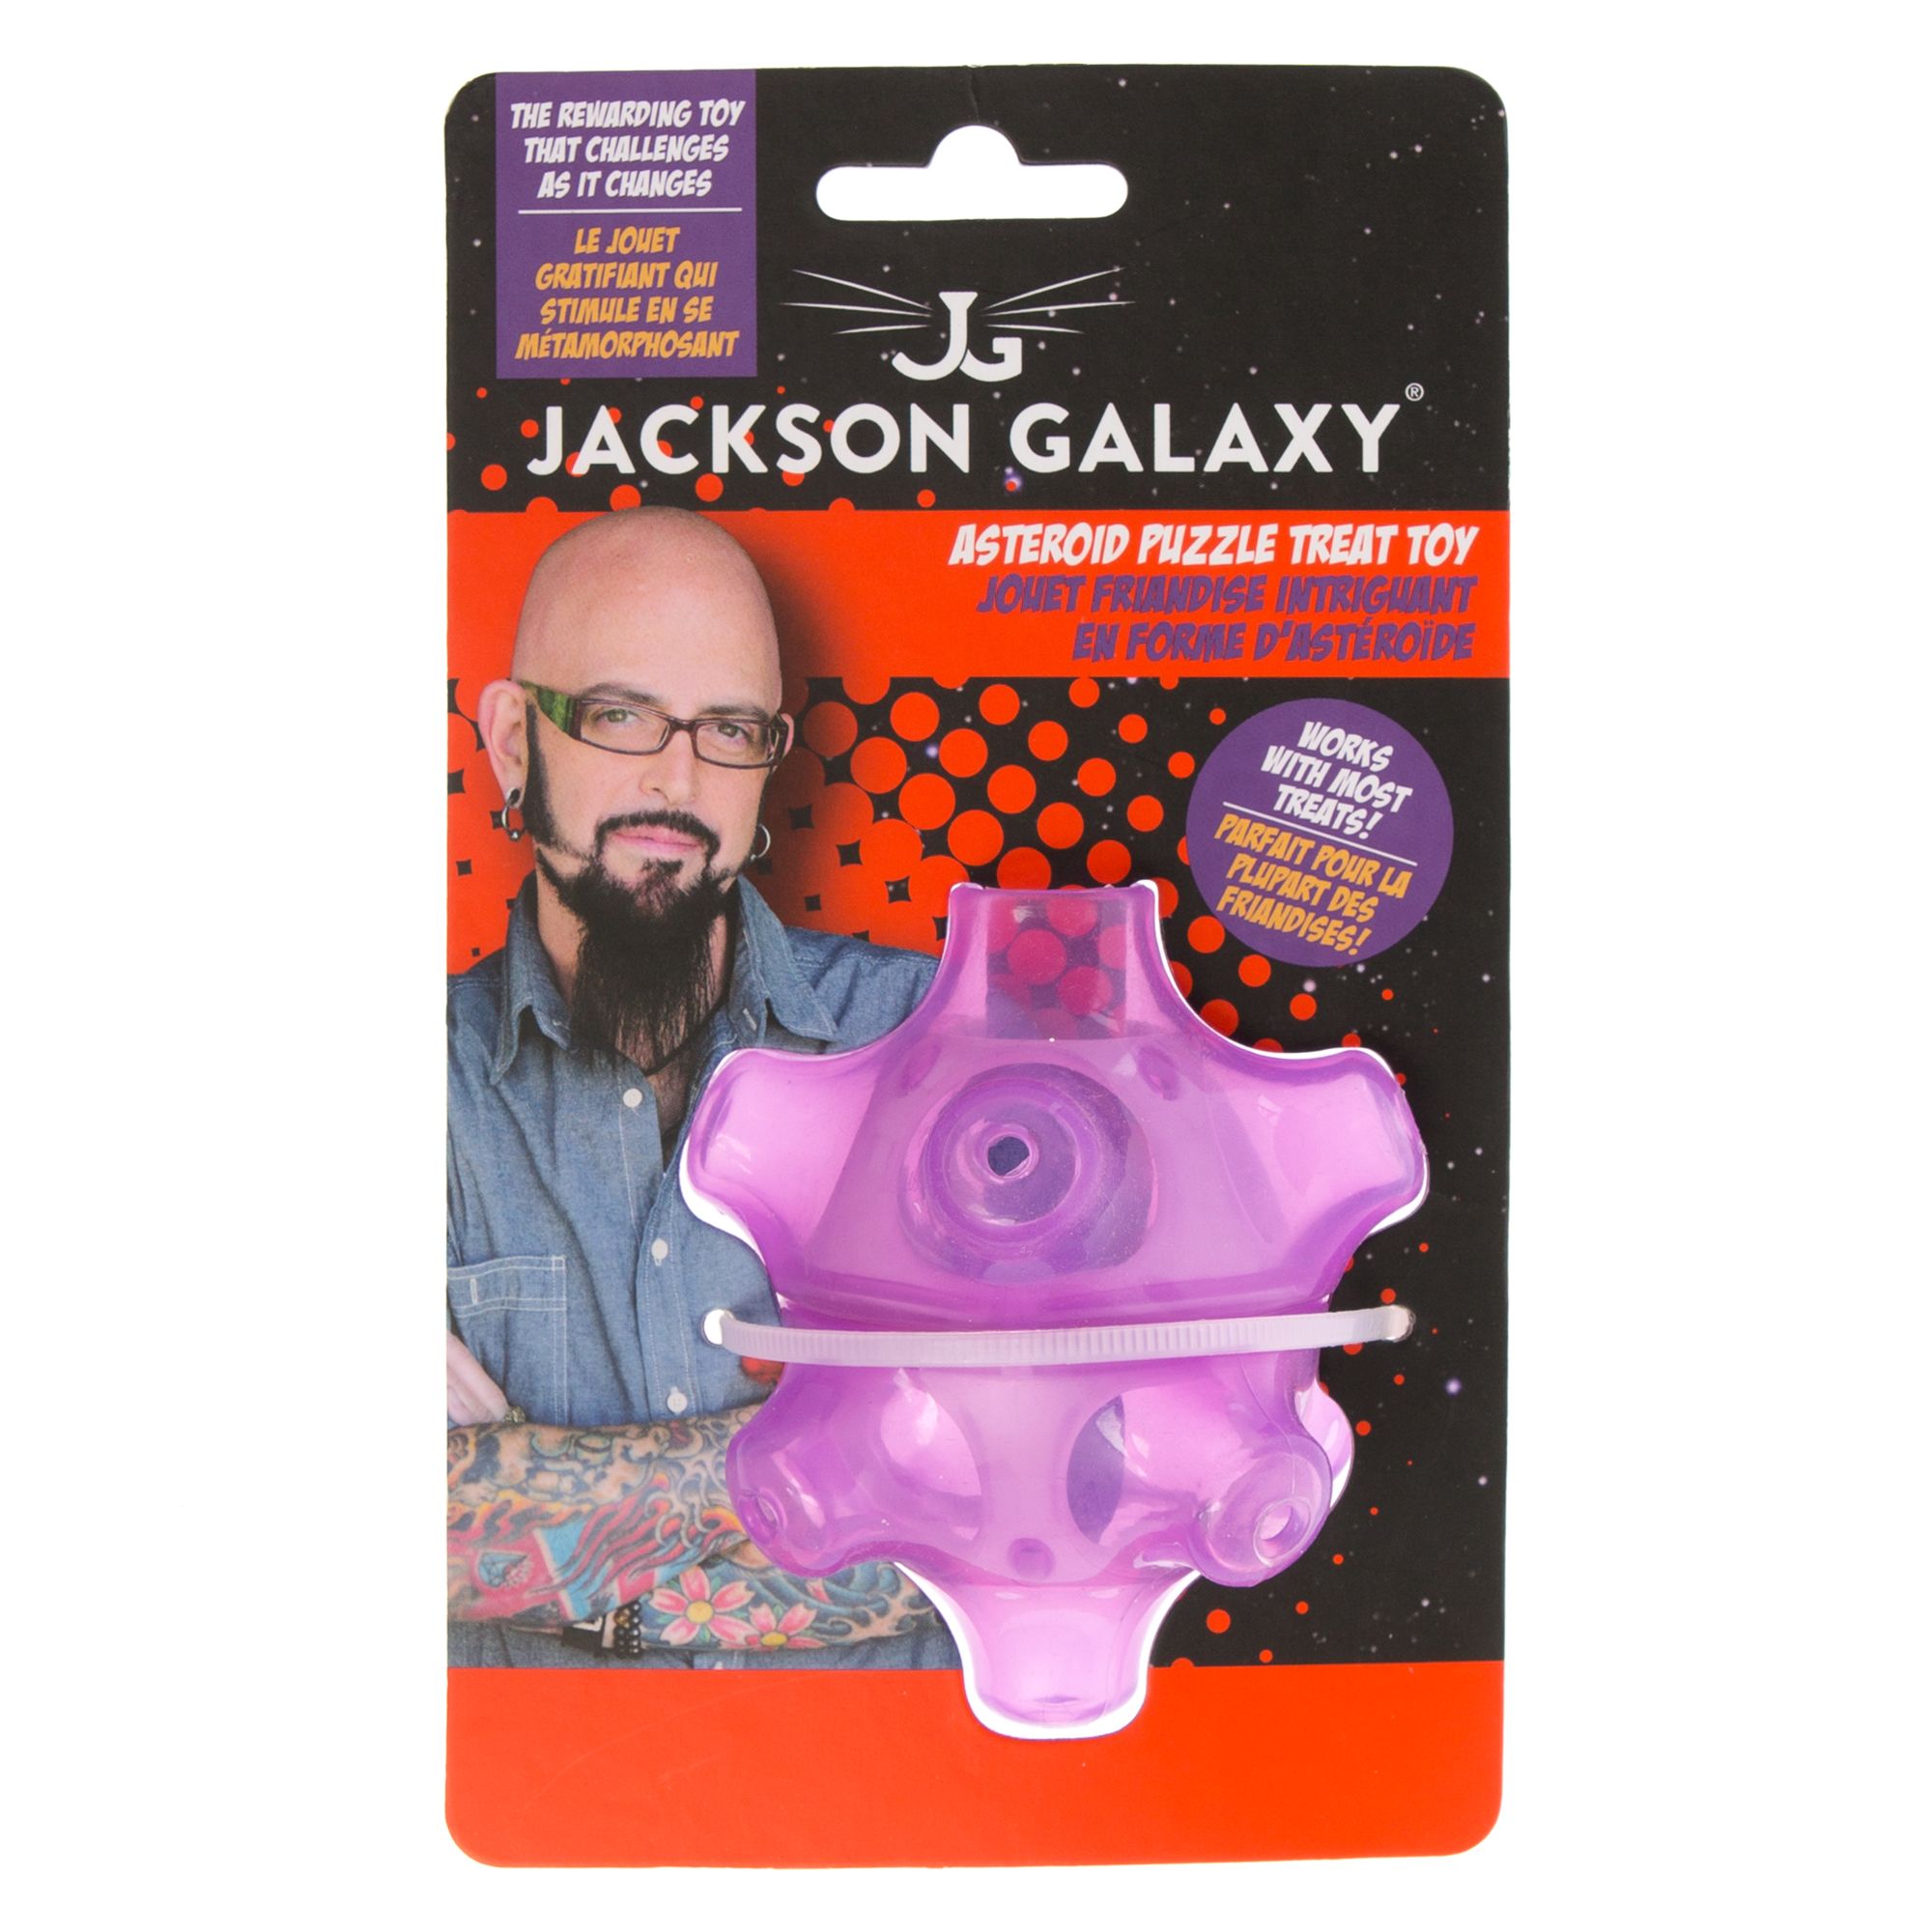 Jackson Galaxy® Asteroid Puzzle Treat 